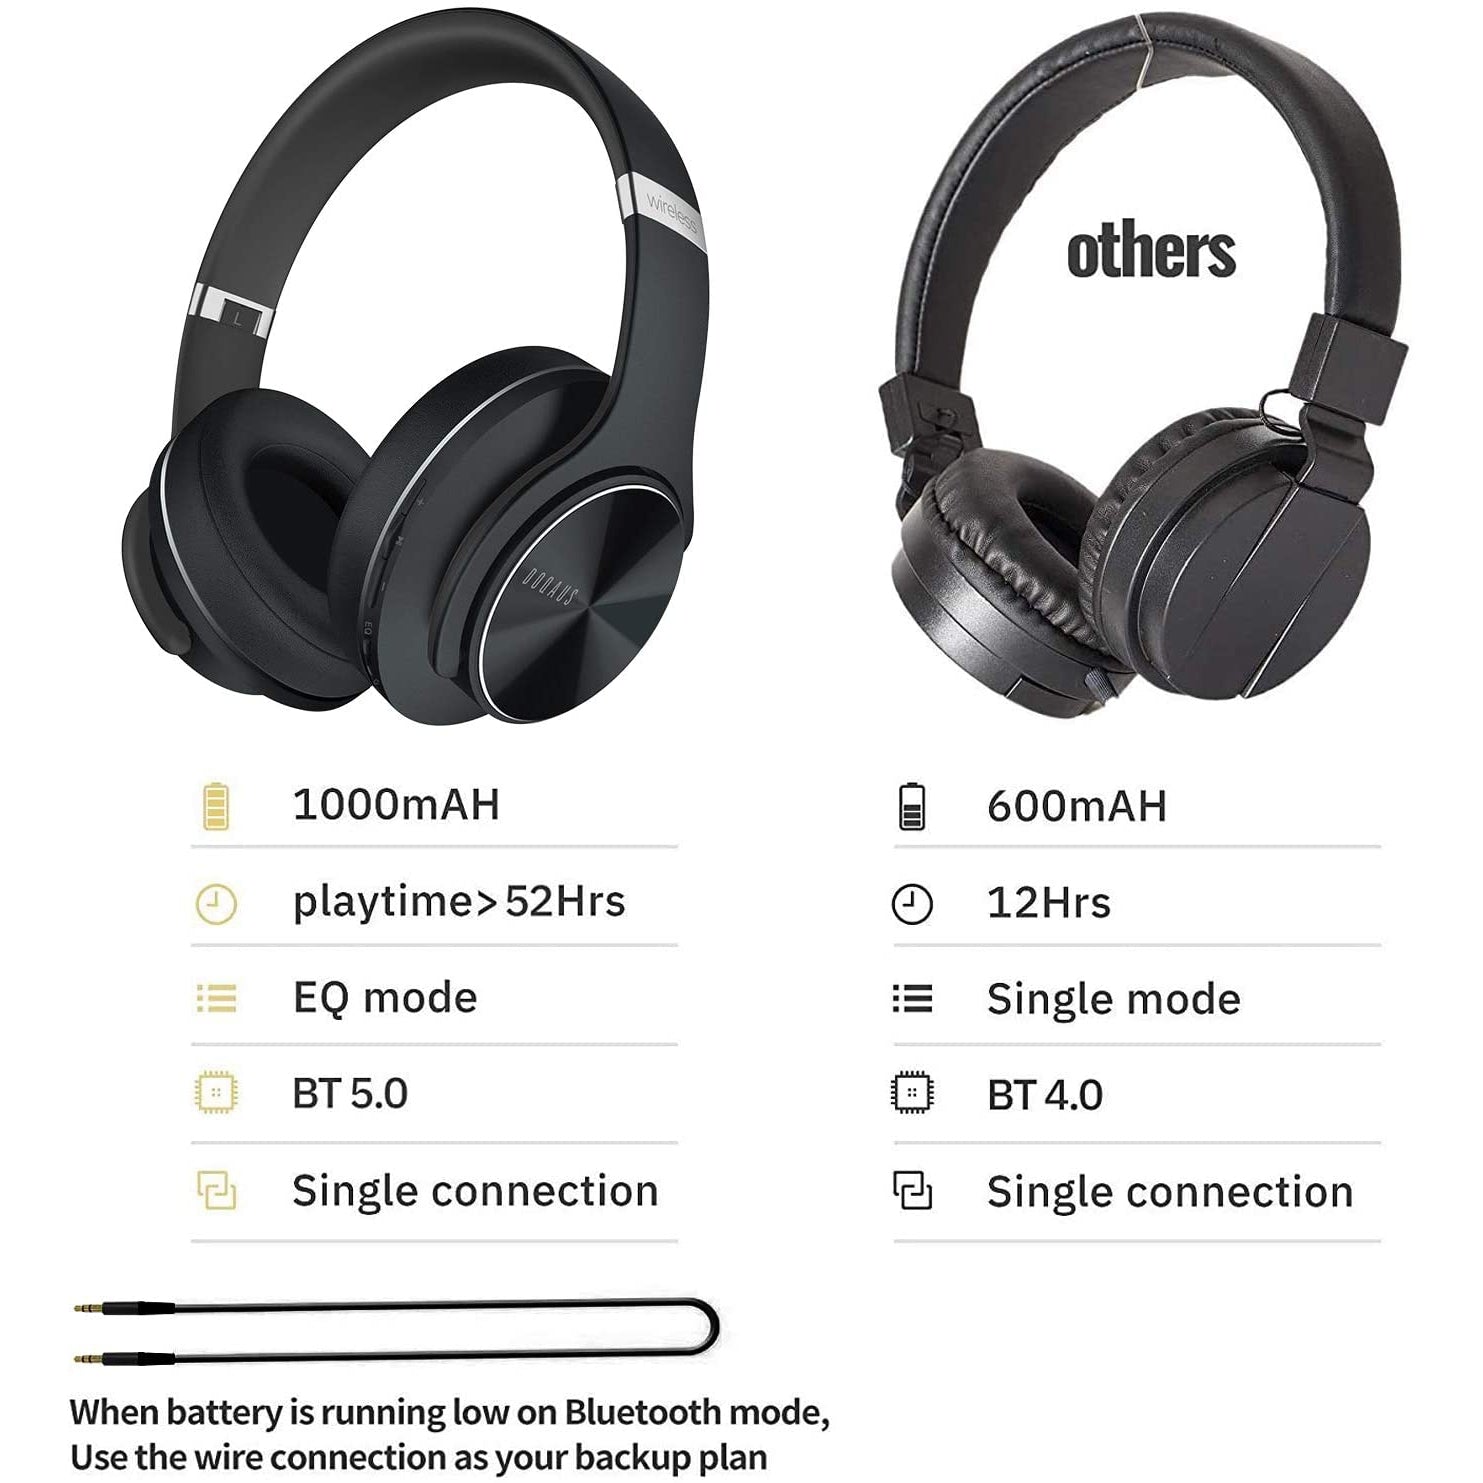 DOQAUS Care 1 Bluetooth Headphones - Black